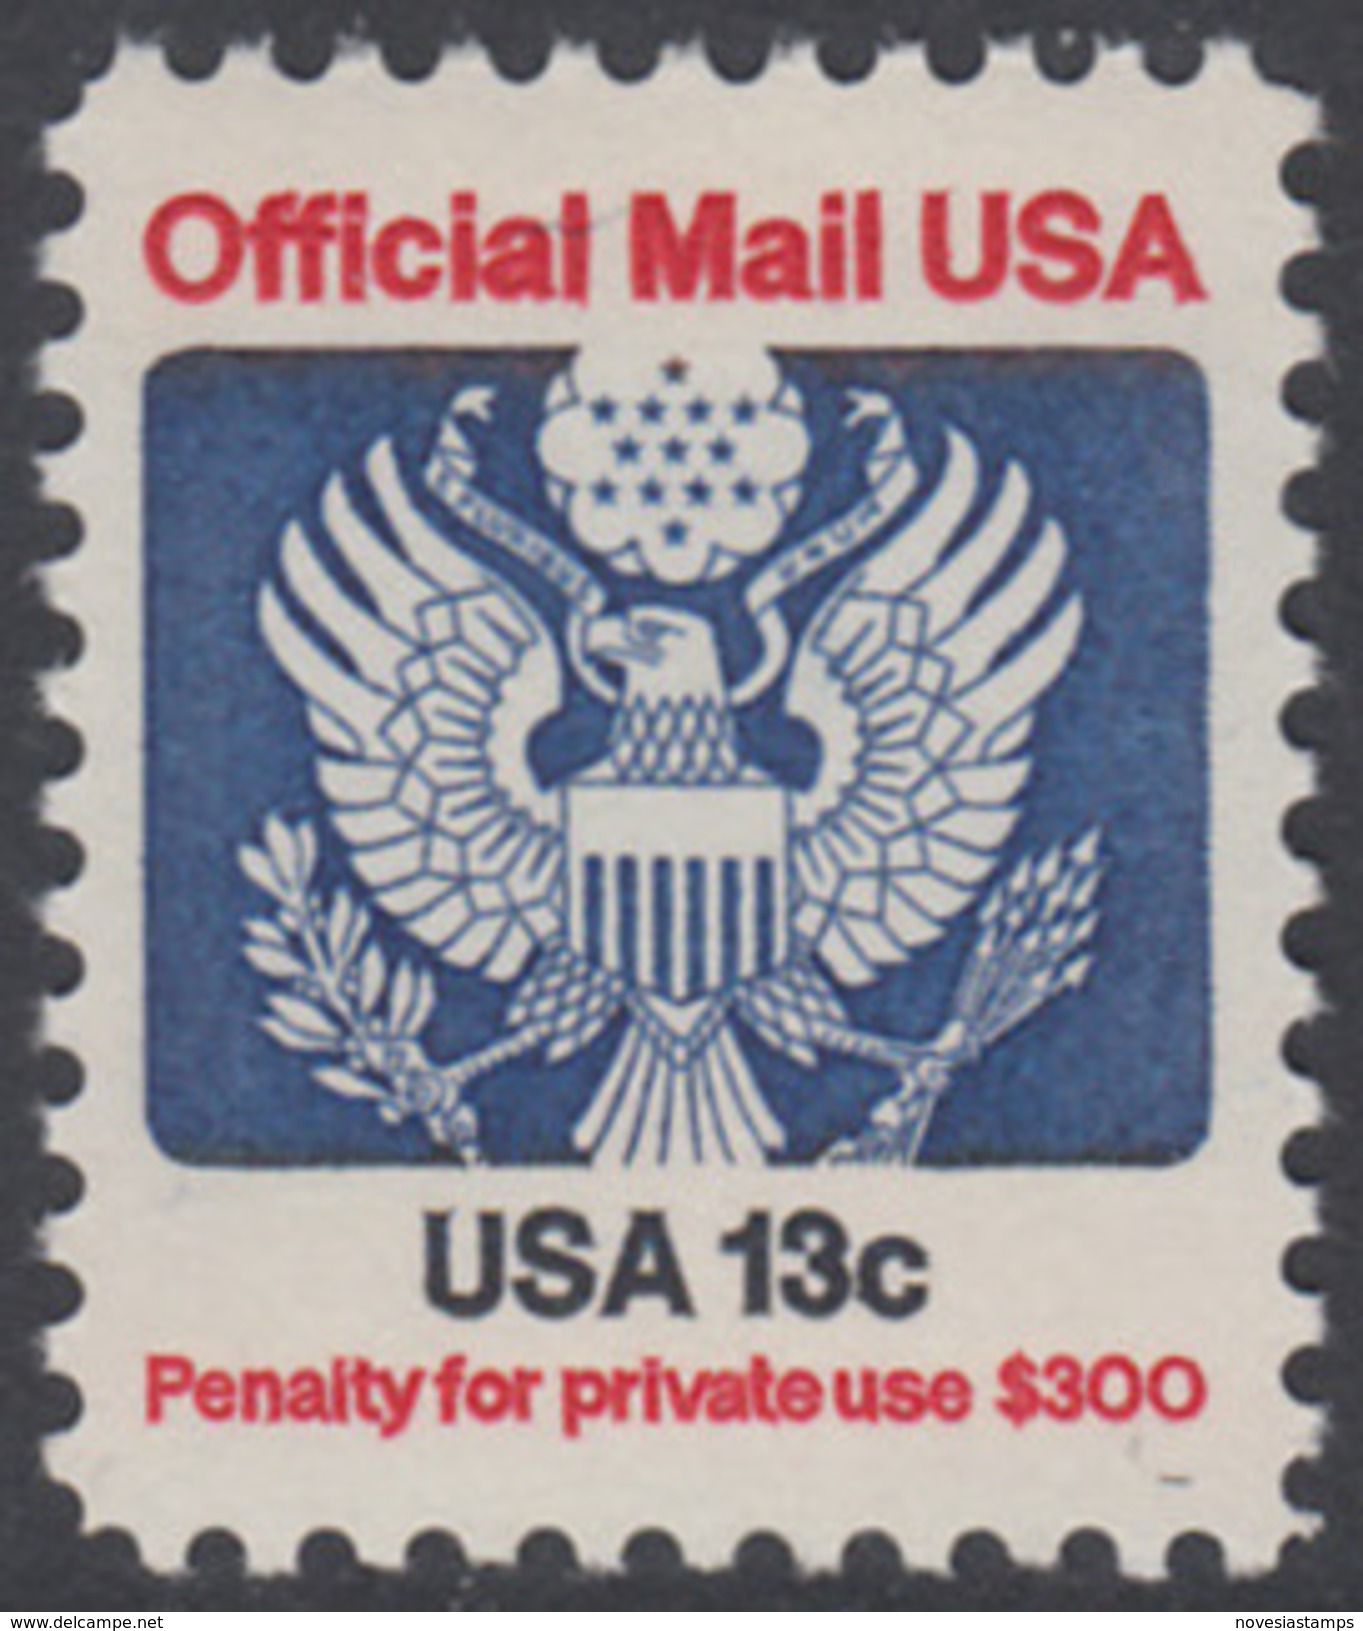 !a! USA Sc# O129 MNH SINGLE - Great Seal - Dienstmarken